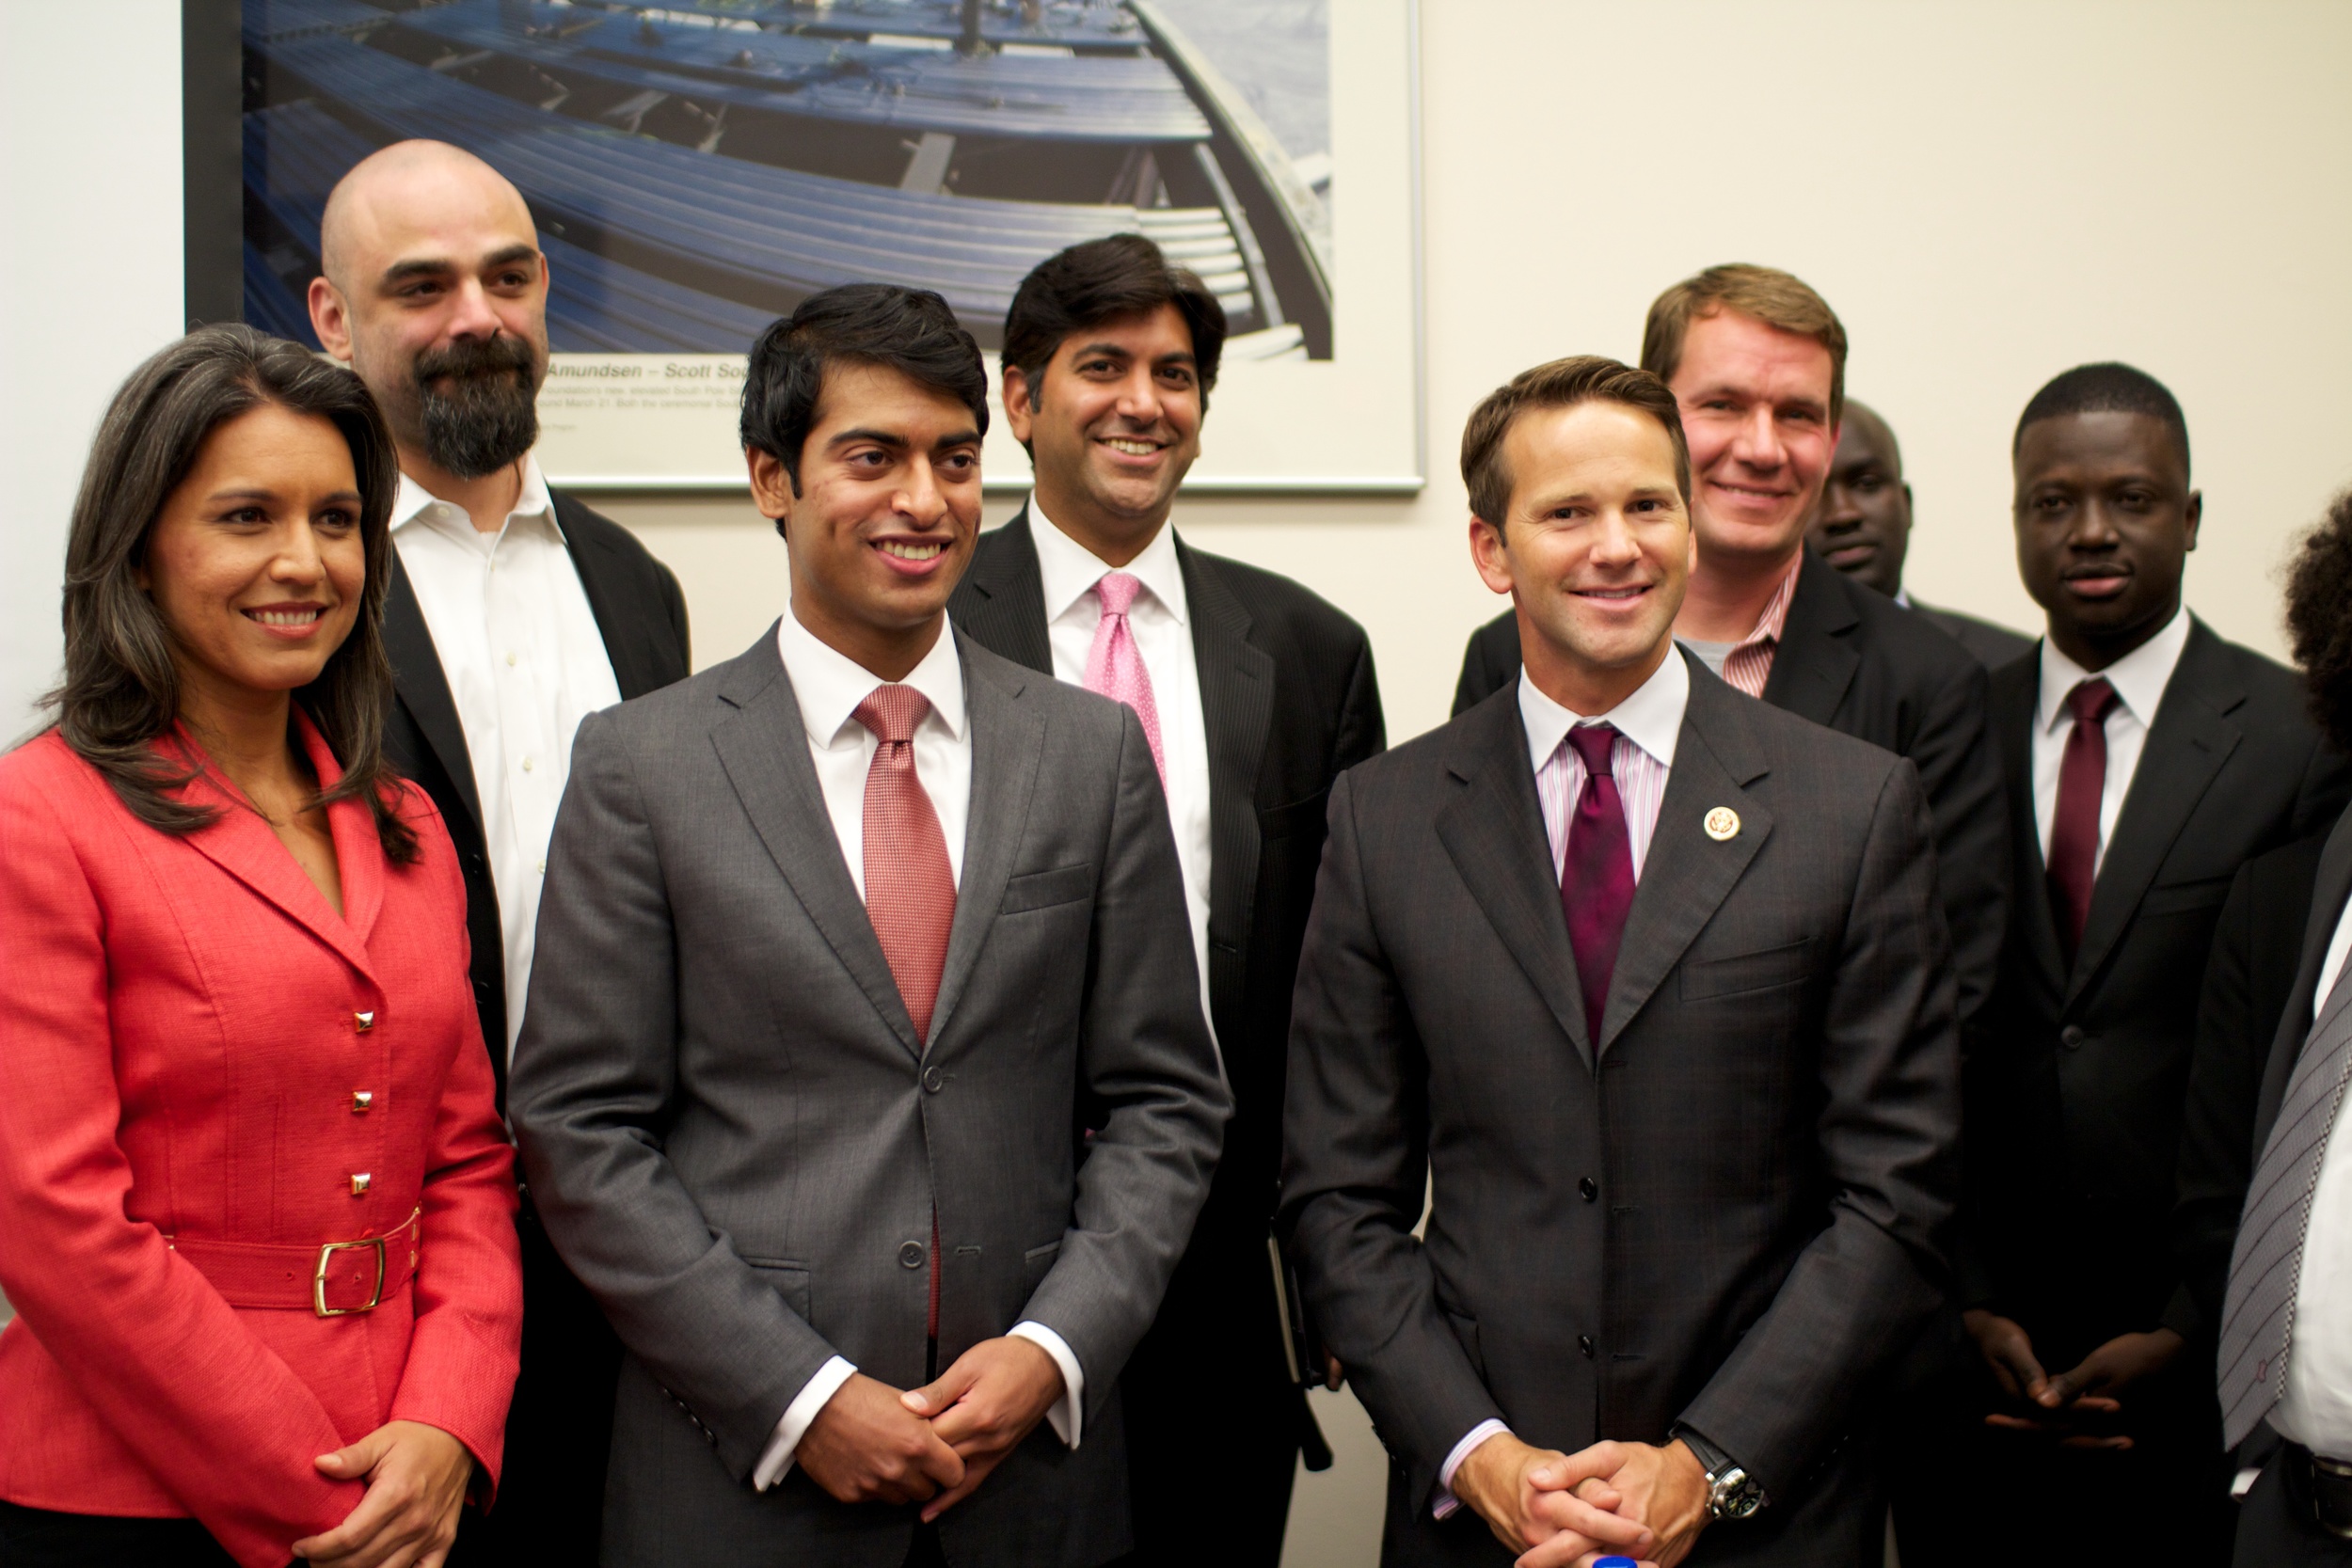 From left: Rep. Tulsi Gabbard (D-HI); John Stanton; Steven Olikara; Aneesh Chopra; Rep. Aaron Schock (R-IL); and Scott Case.